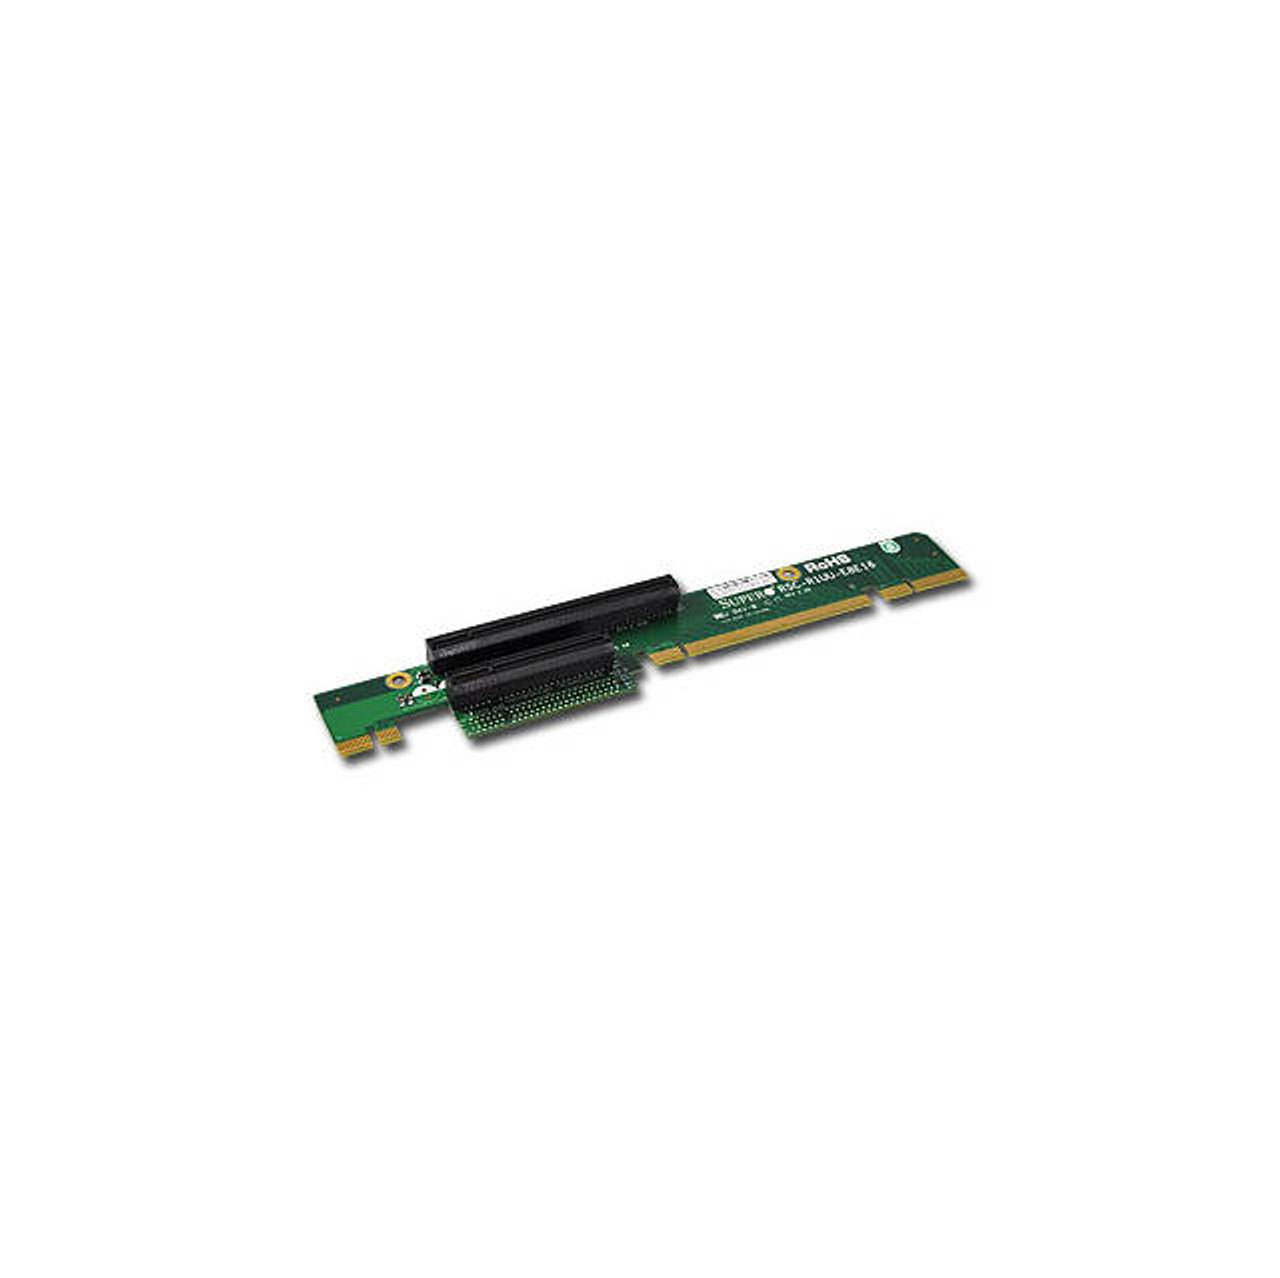 Supermicro RSC-R1UU-E8E16 1U Right Slot PCI-Express x8 & PCI-Express x16 + UIO Riser Card